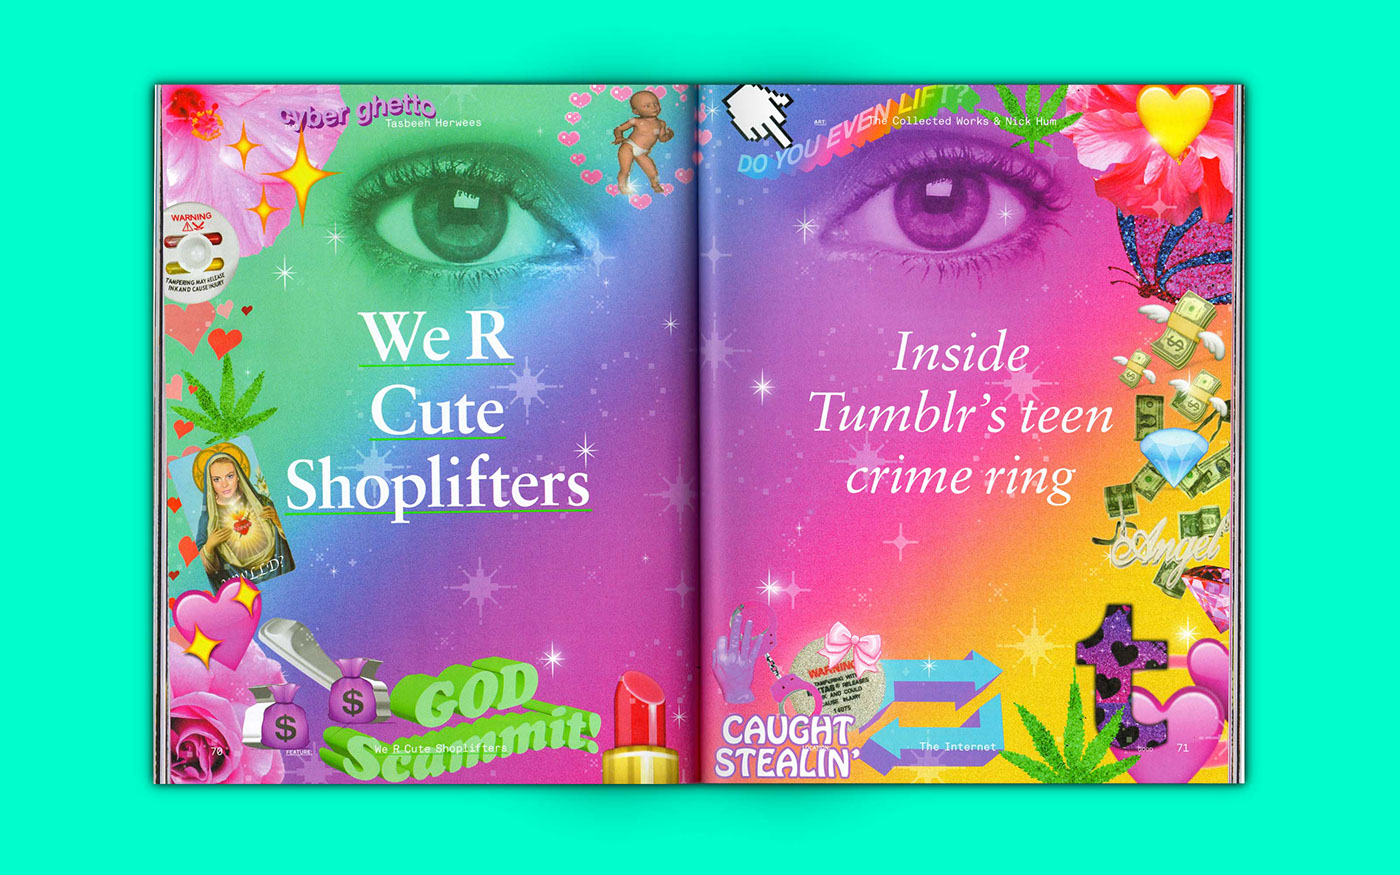 Editorial Illustration tumblr gifs Good magazine shoplifters memes magazine Magazine Covers money winona ryder